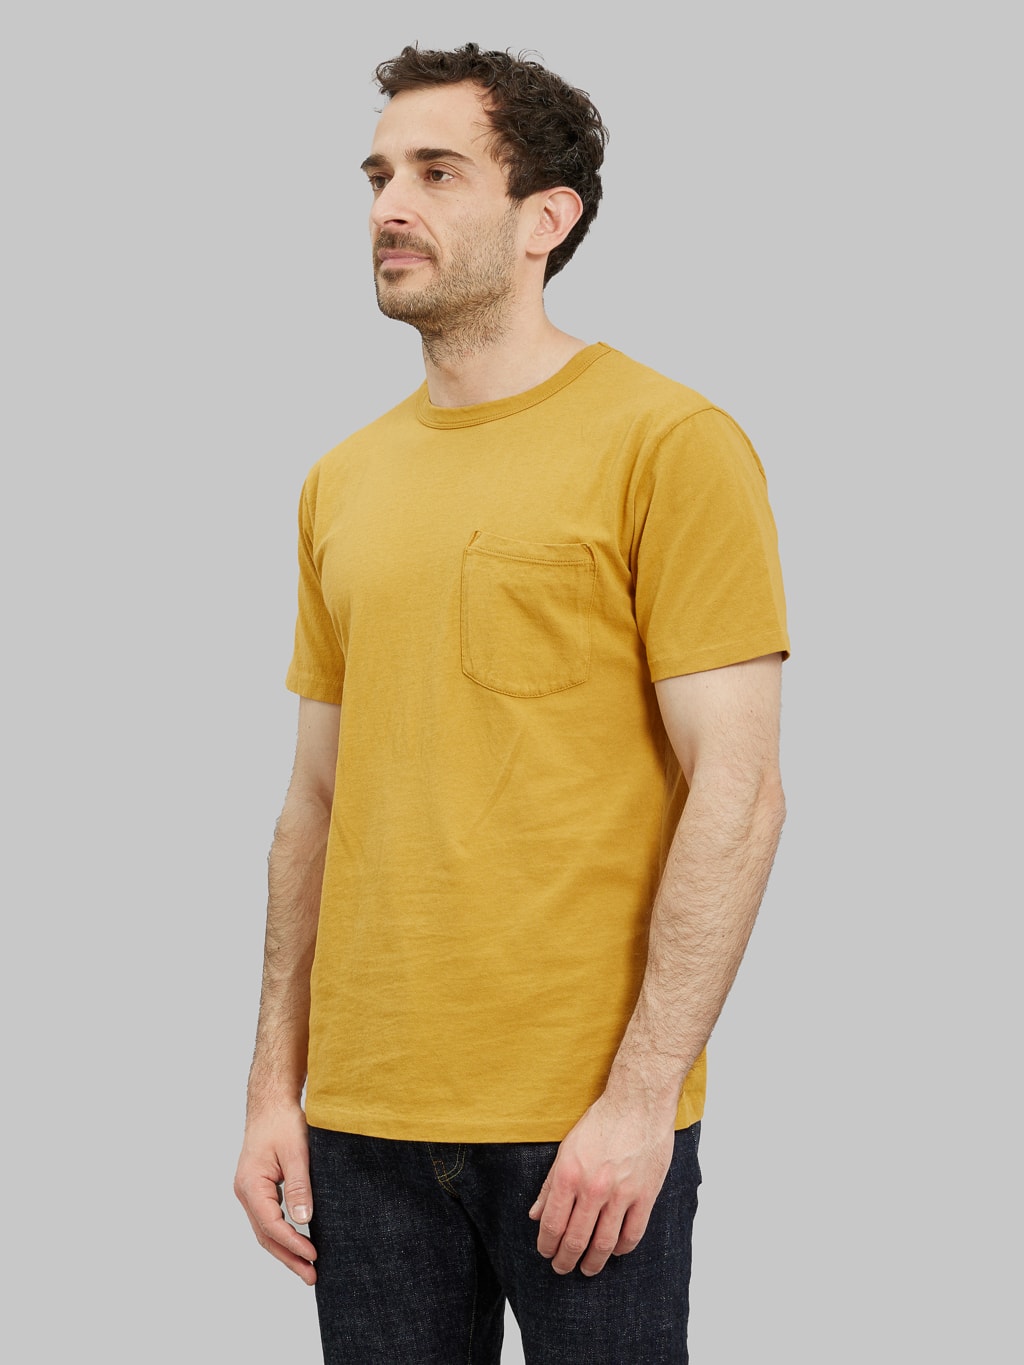 freenote cloth 9 ounce pocket t shirt mustard heavyweight side look